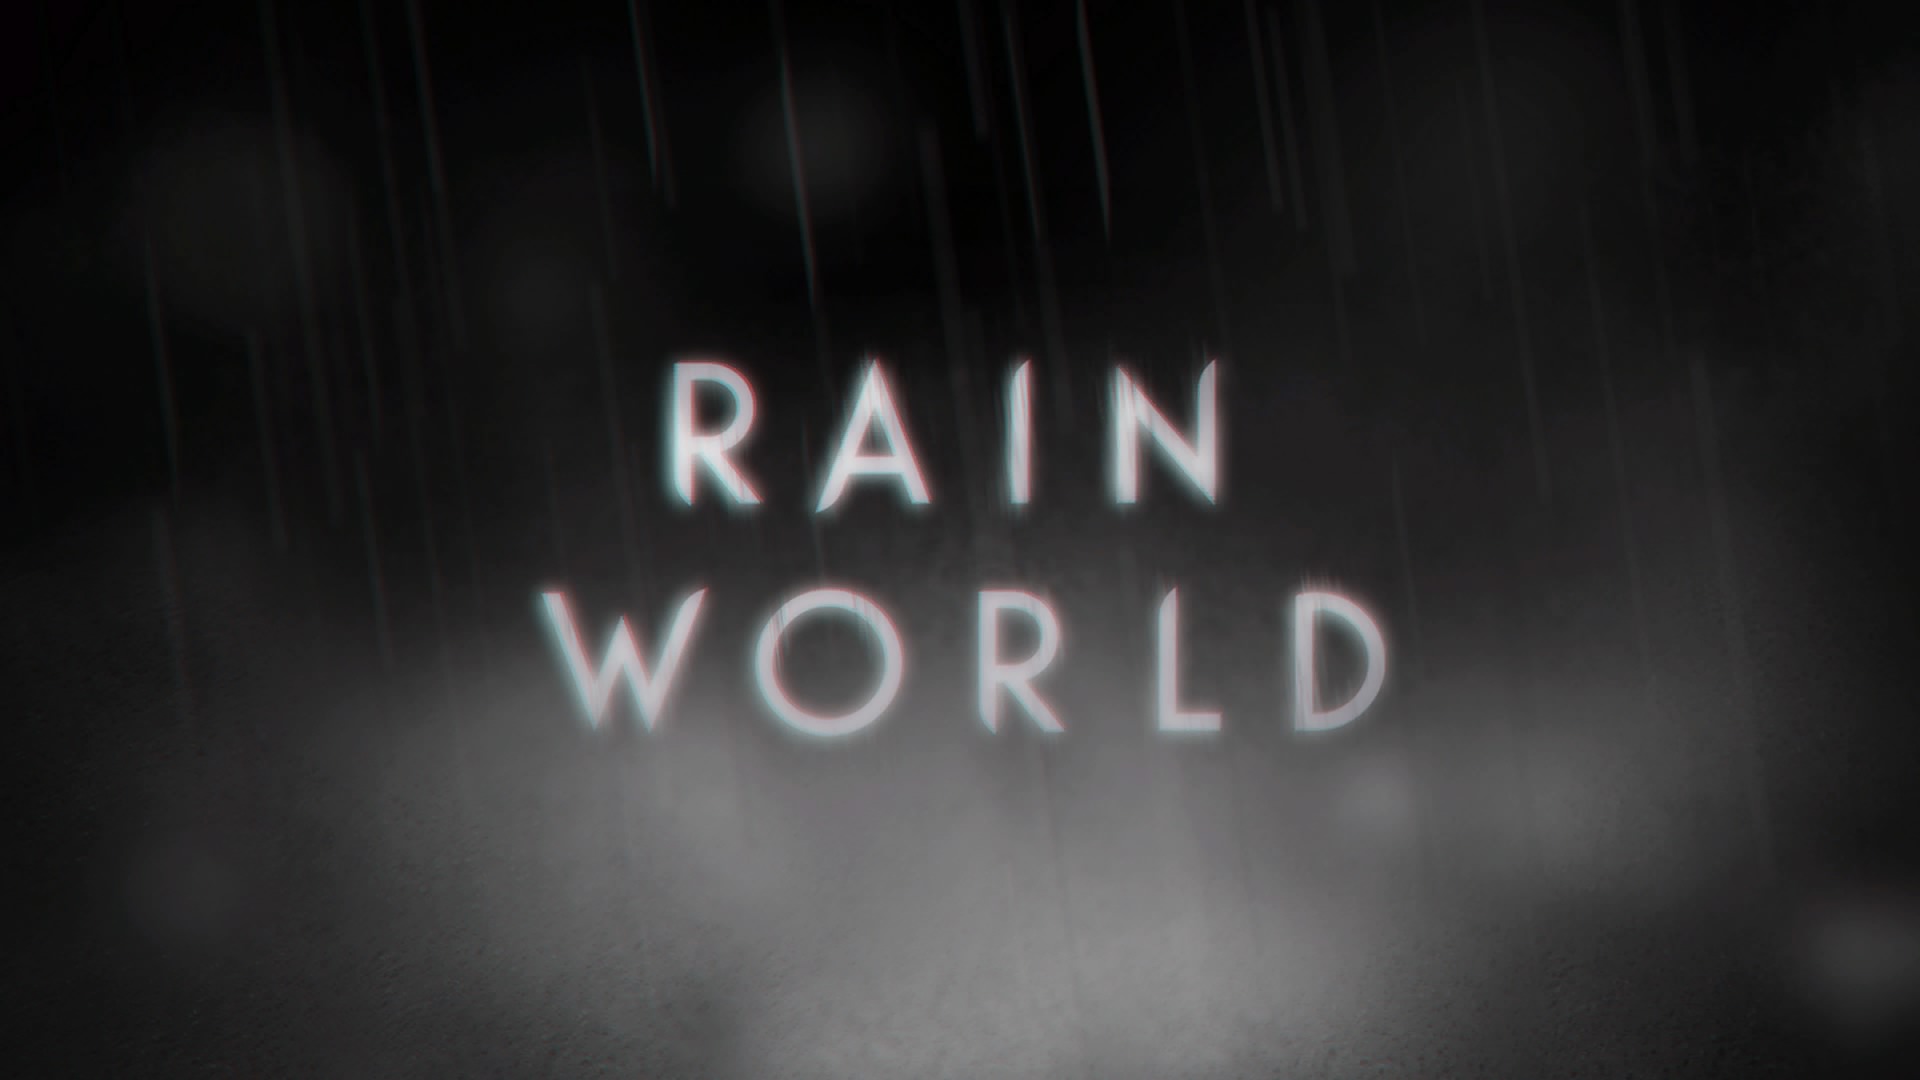 download rain world ps4